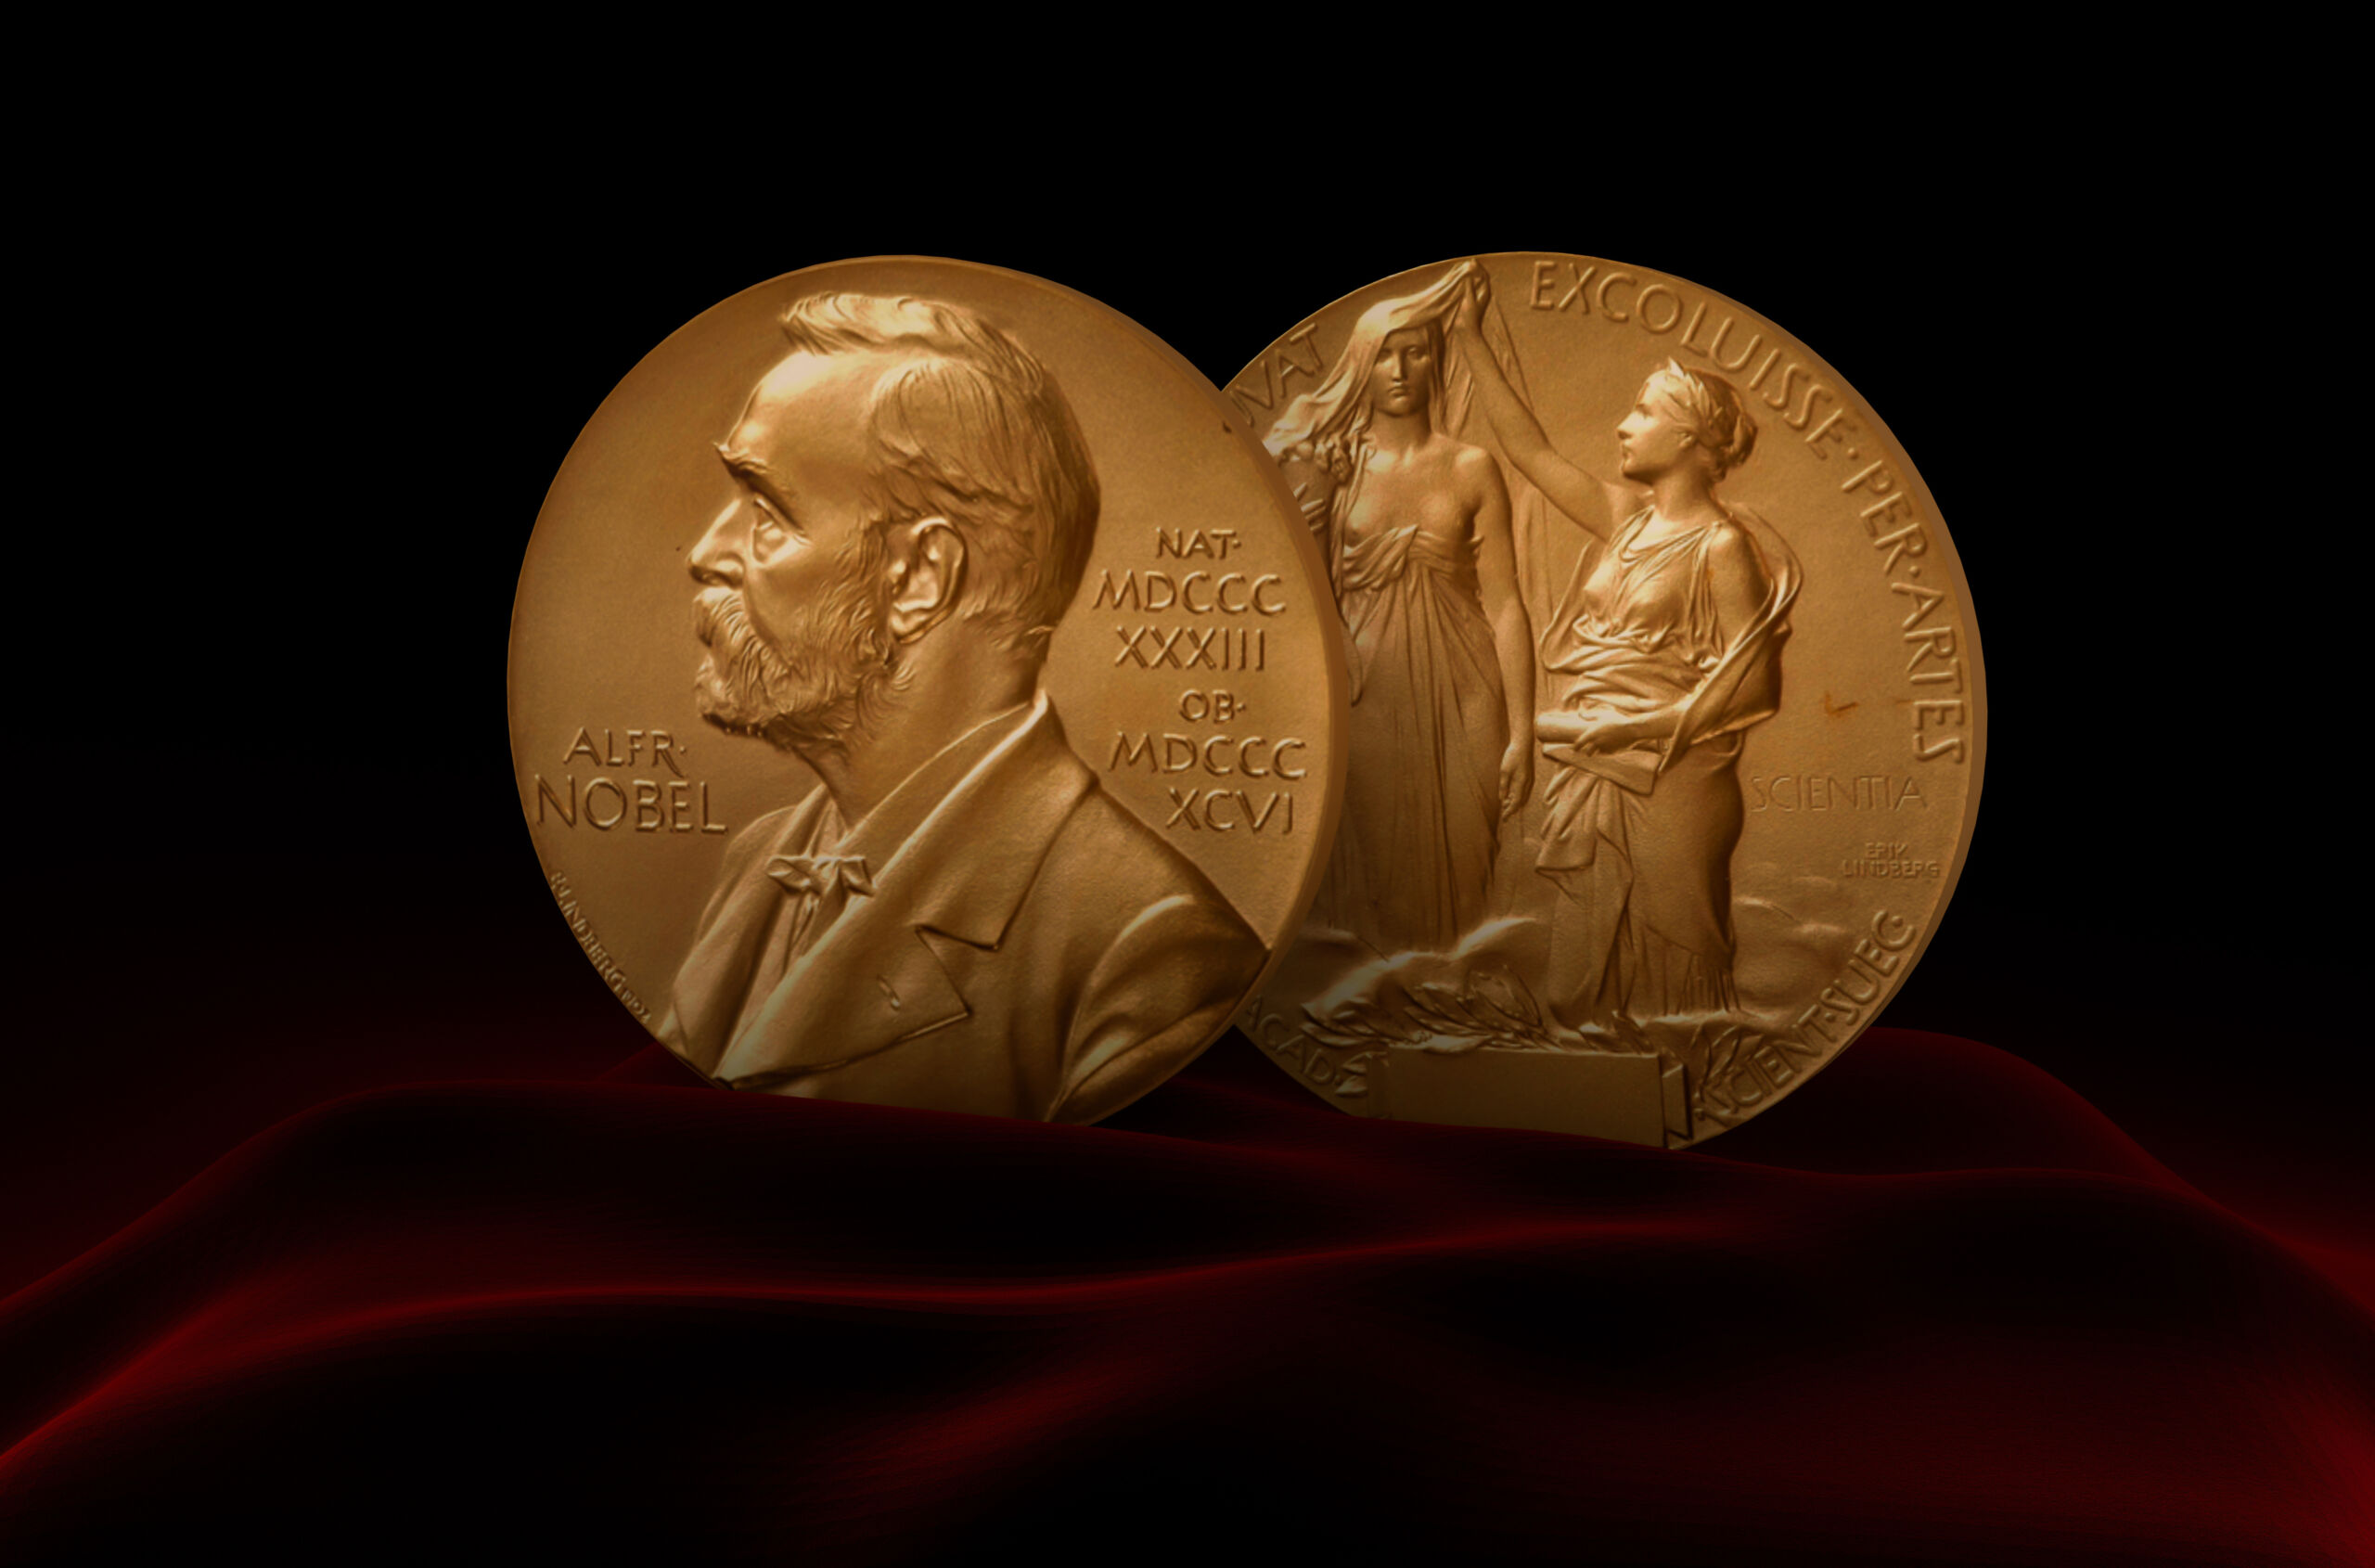 Nagroda Nobla to między innymi medal i nagroda finansowa